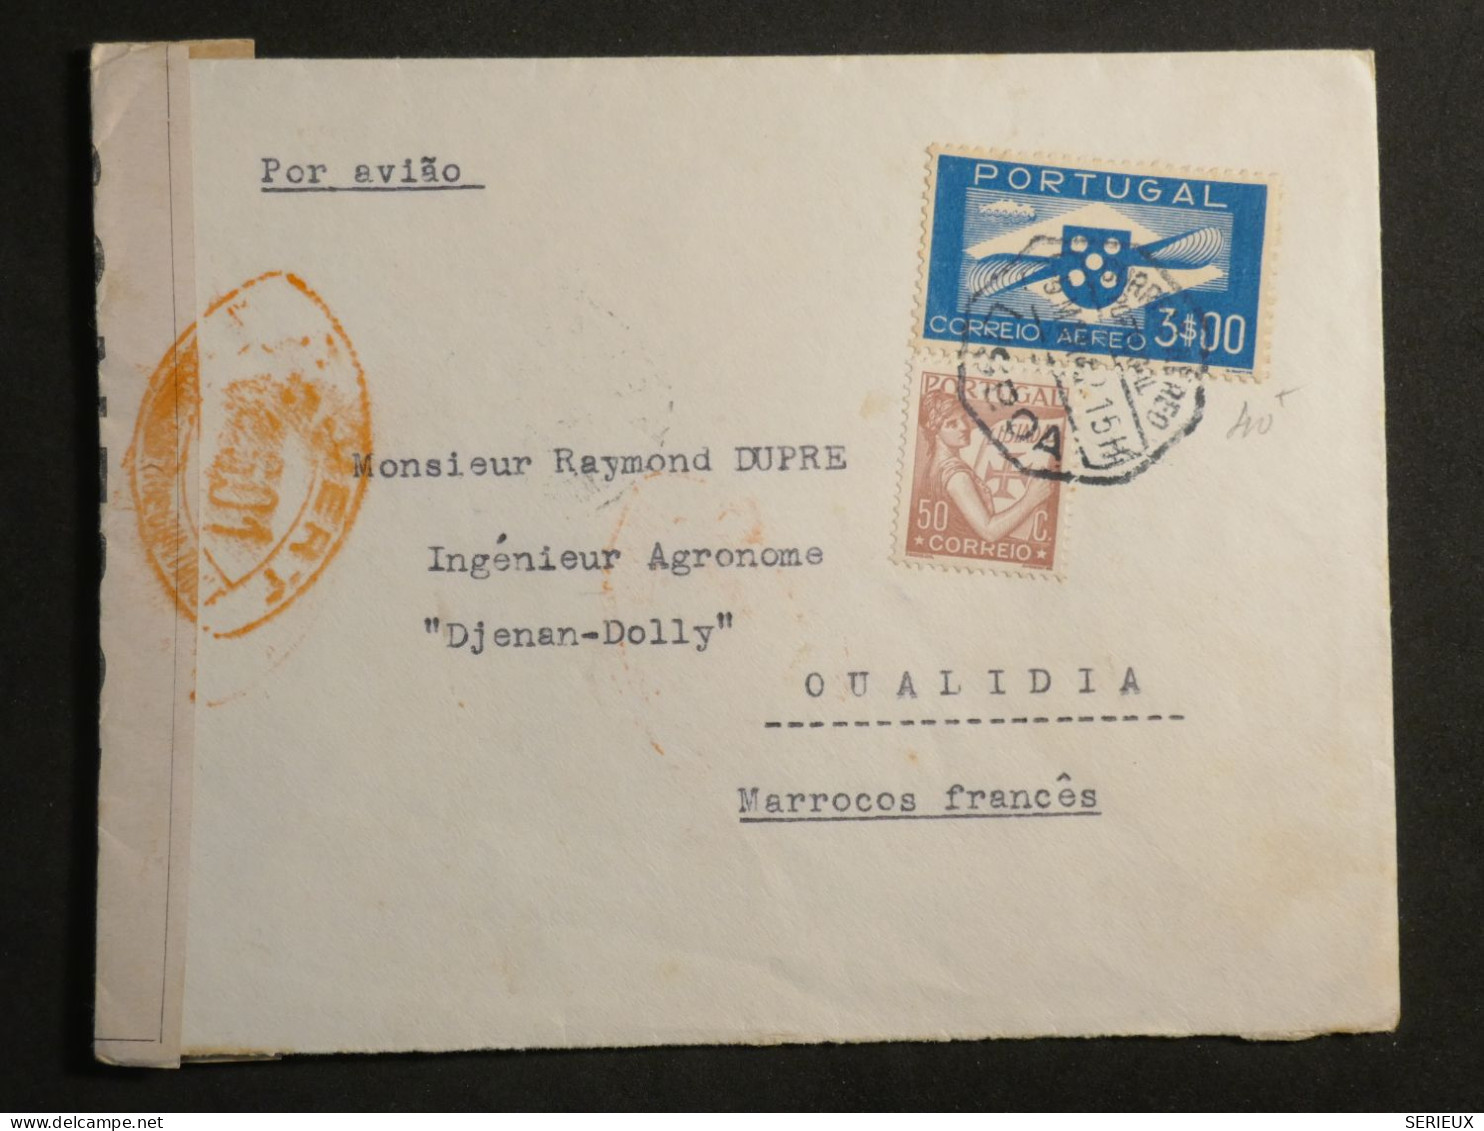 DN9 PORTUGAL  LETTRE CENSUREE RARE  1942 LISBOA  A  OUALIDIA MAROC  FRANCAIS ++ + AFF.  INTERESSANT++ - Lettres & Documents